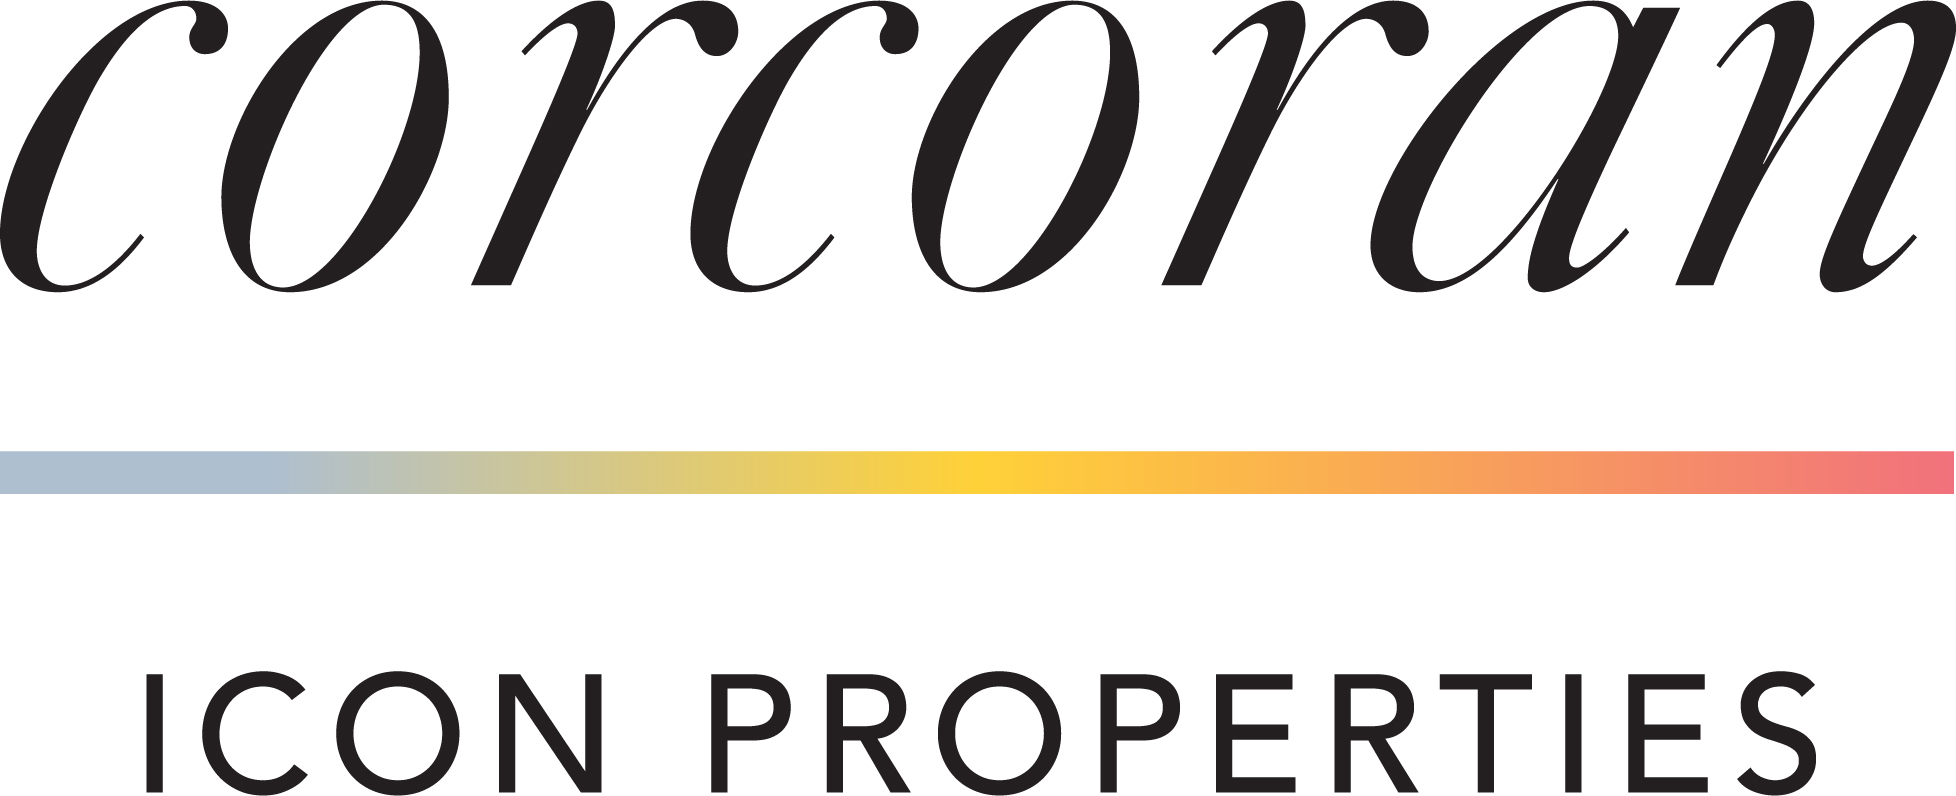 Corcoran Icon Properties logo